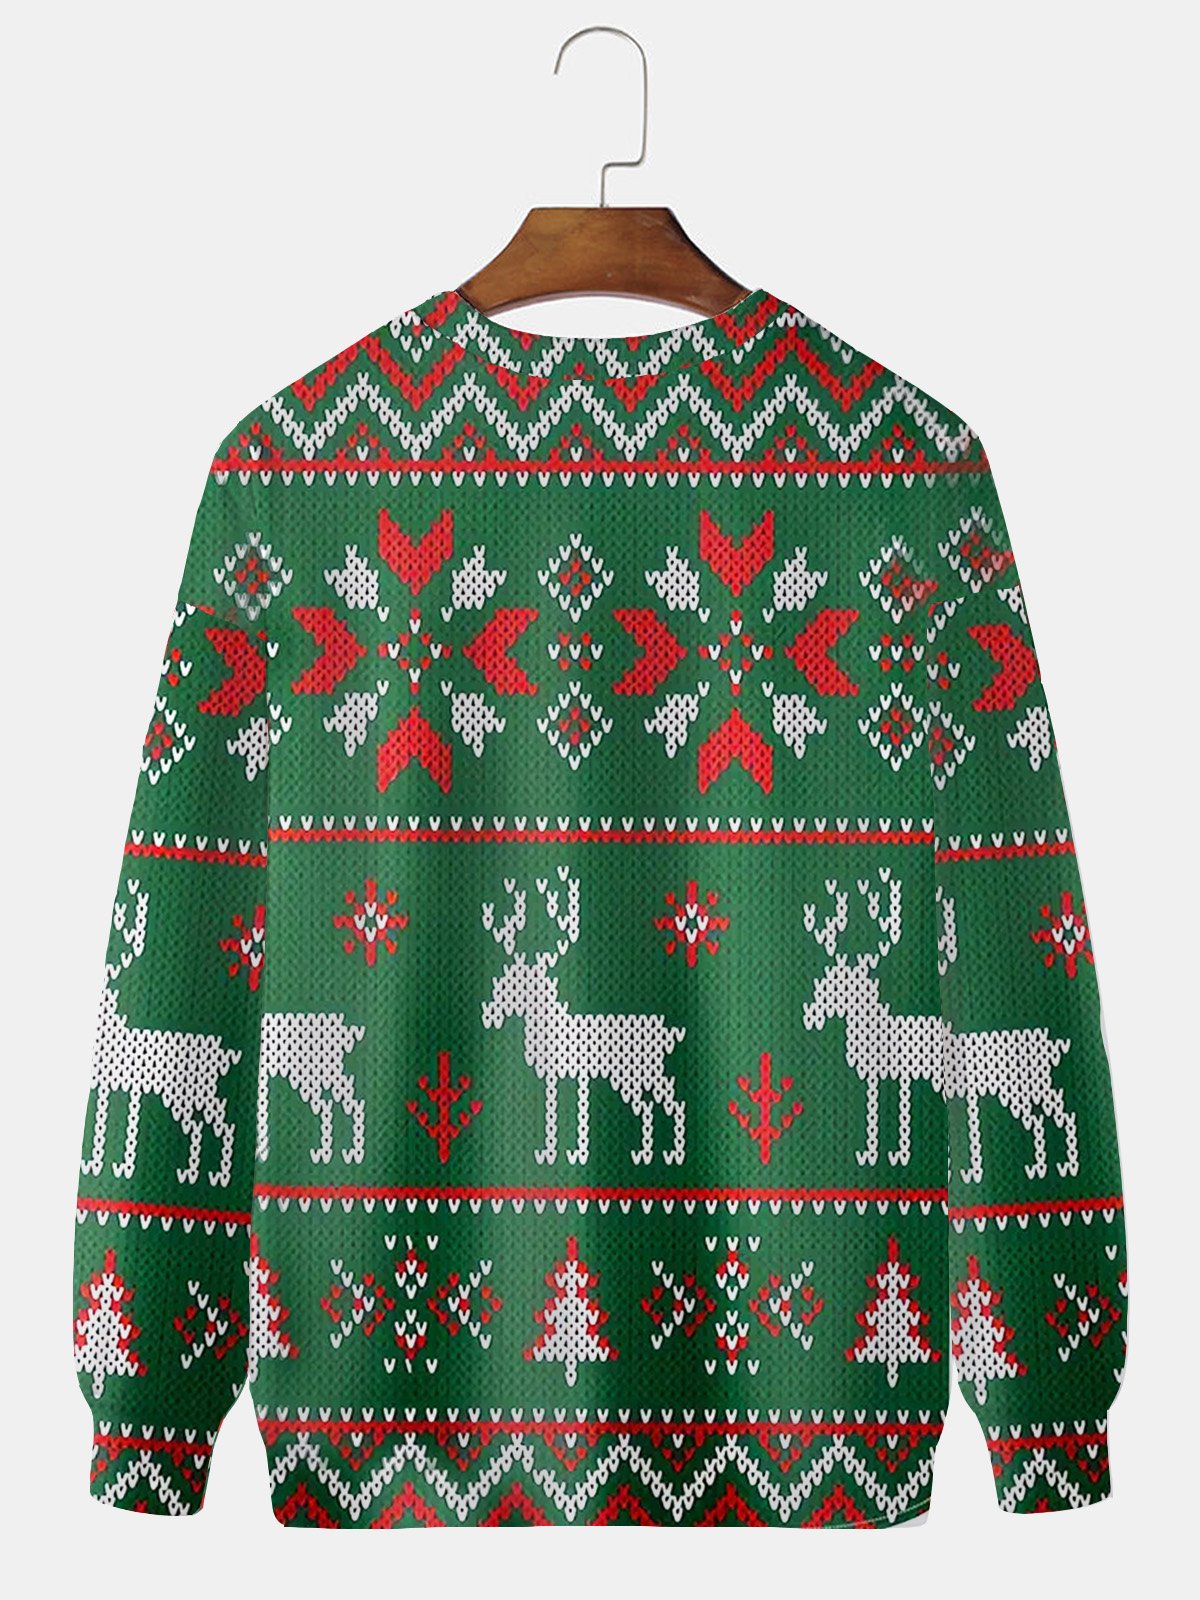 JoyMitty Men's Christmas Sika Deer Print Crew Neck Sweatshirt